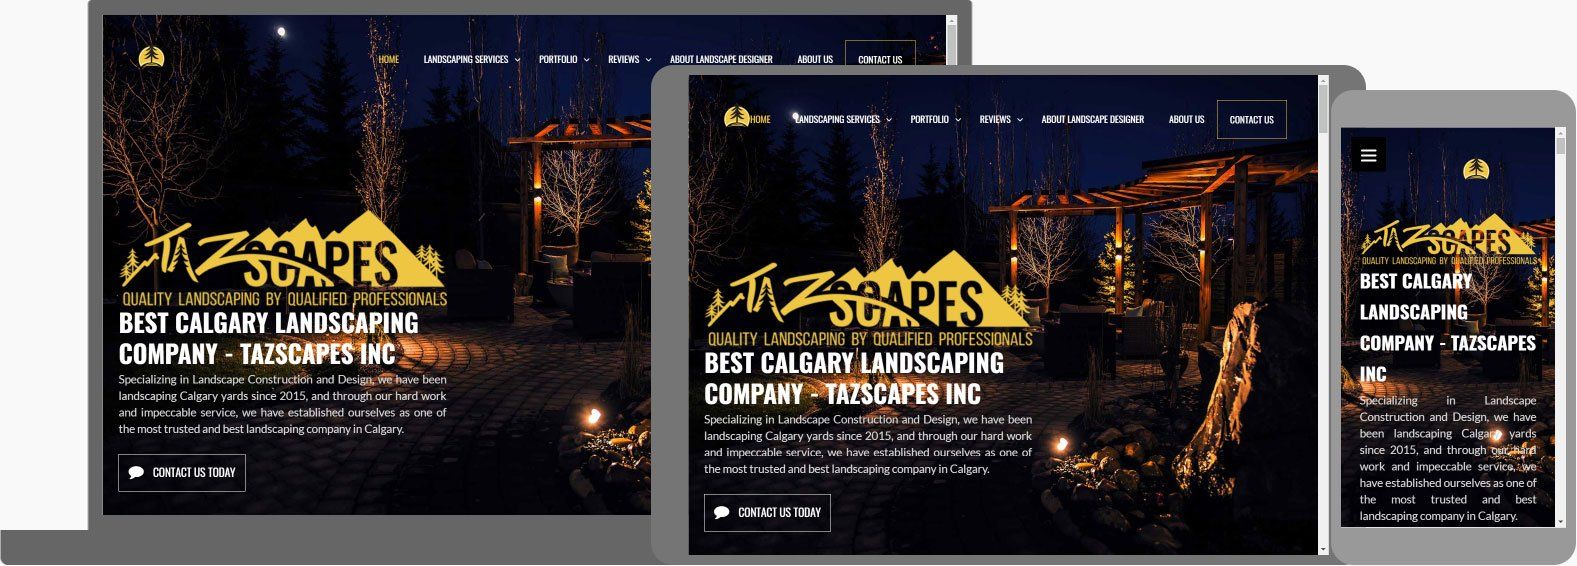 Website For Landscape Design Company - Tazscapes Inc.